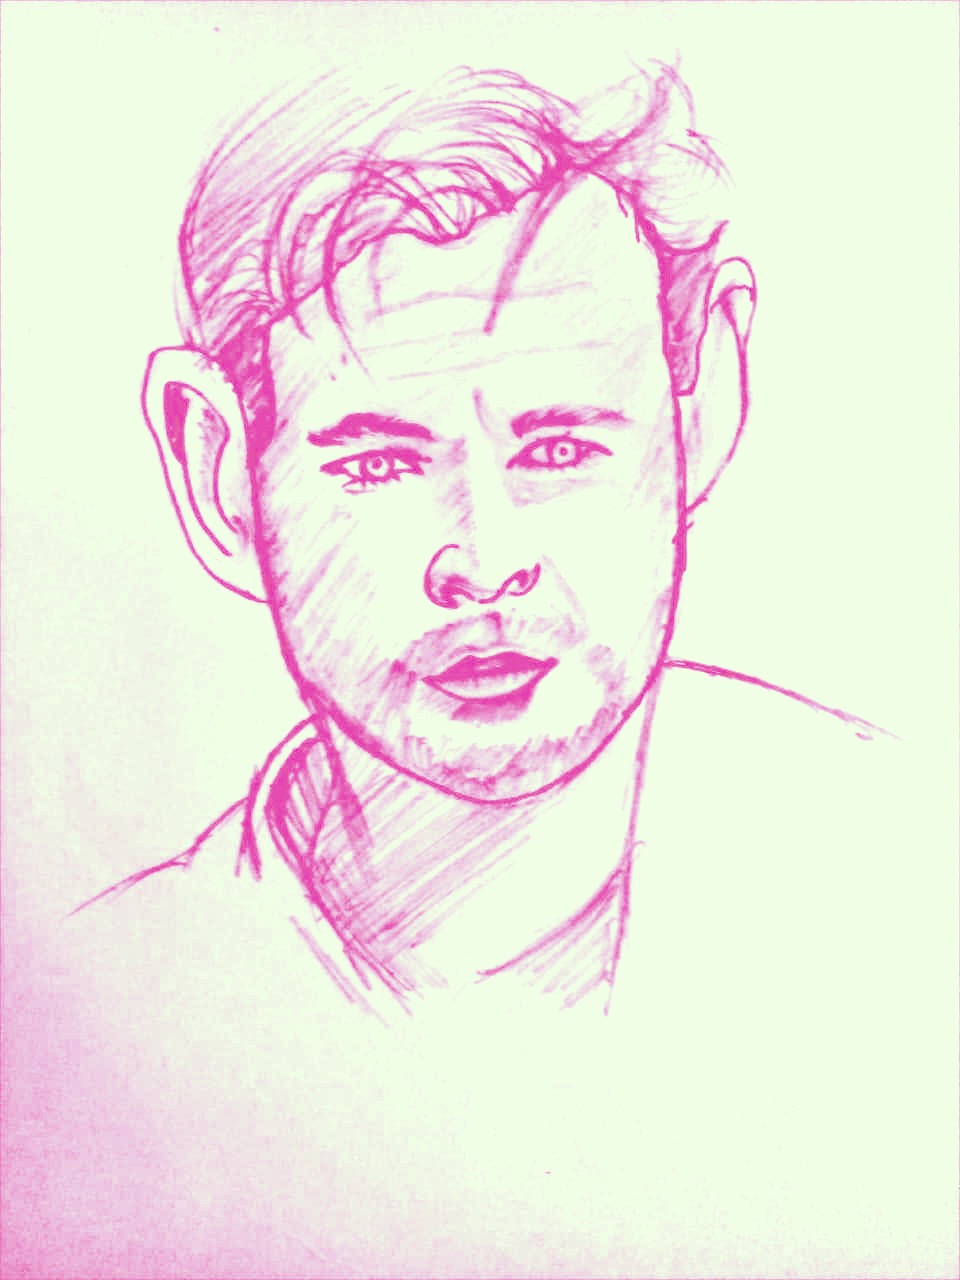 Chris hemsworth sketch with pencil by kumarrart on DeviantArt